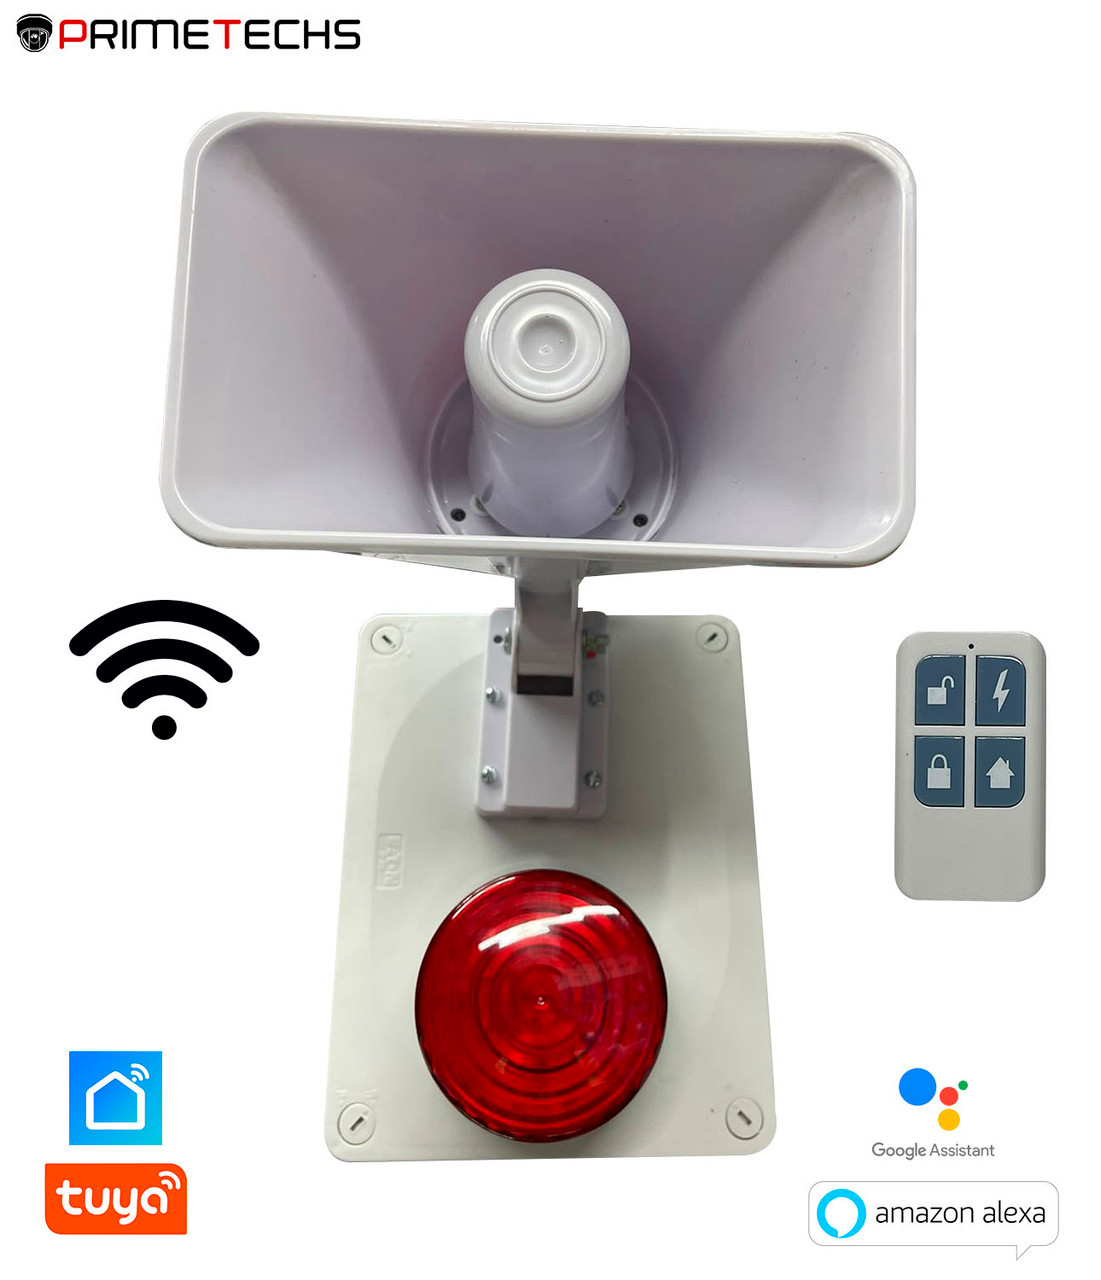 Alarma inalámbrica PRIMETECHS WIFI con pantalla touchscreen para sensores  inalámbricos y alámbricos, sirena exterior y notificación por aplicación  celular TUYA. Compatible con Alexa y Google Home.